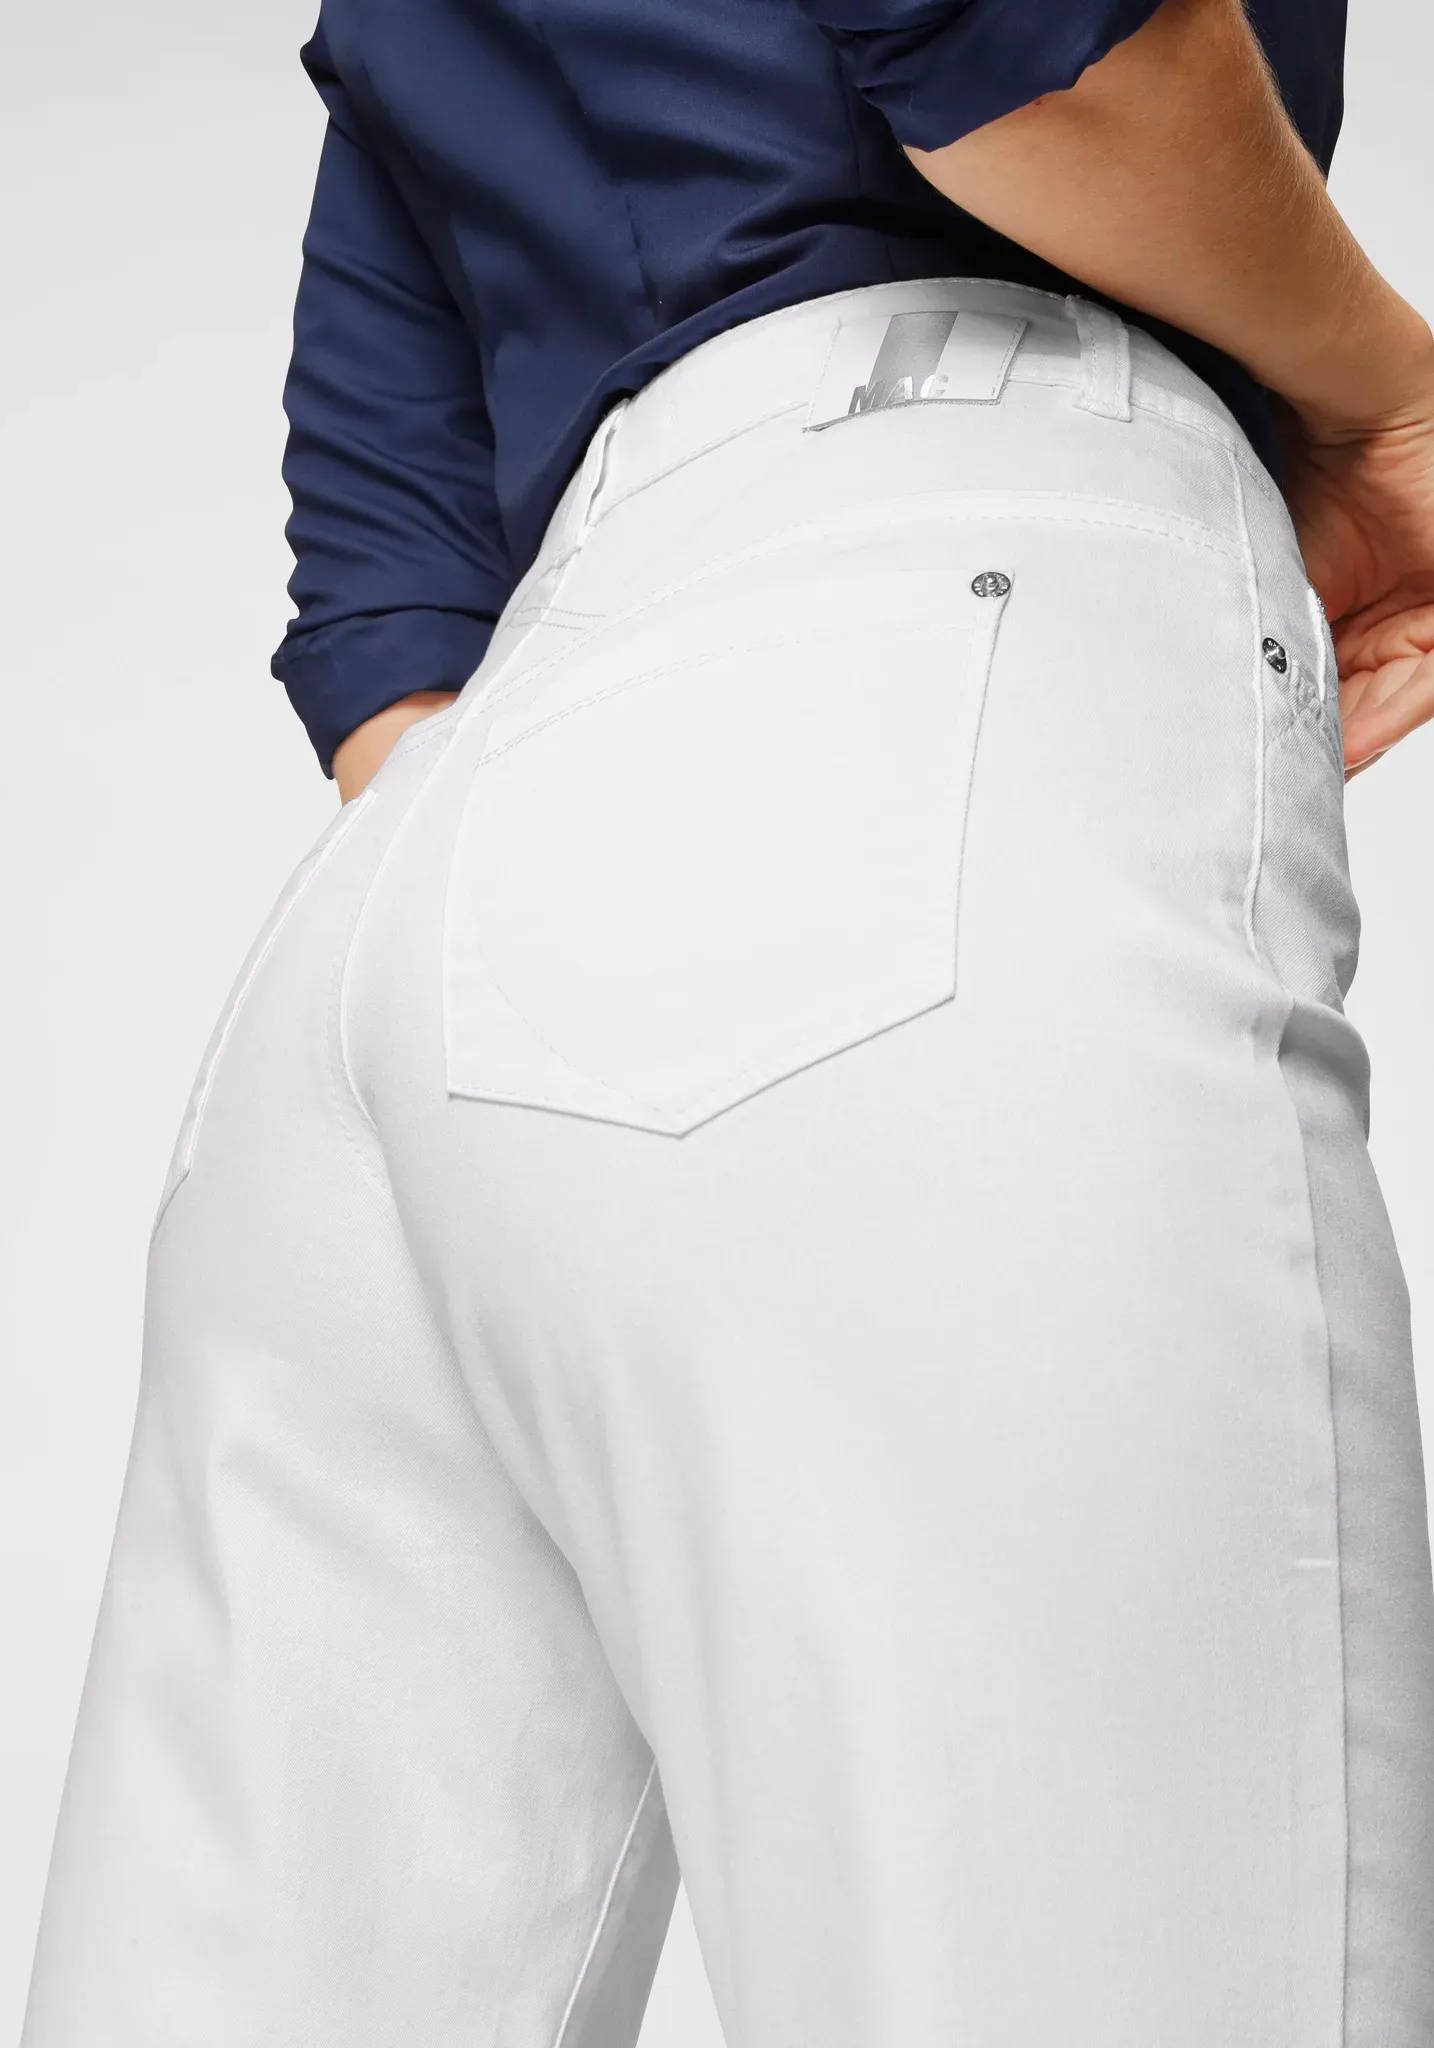 Bequeme Jeans MAC "Gracia" Gr. 40, Länge 32, weiß (white denim) Damen Jeans Passform feminine fit